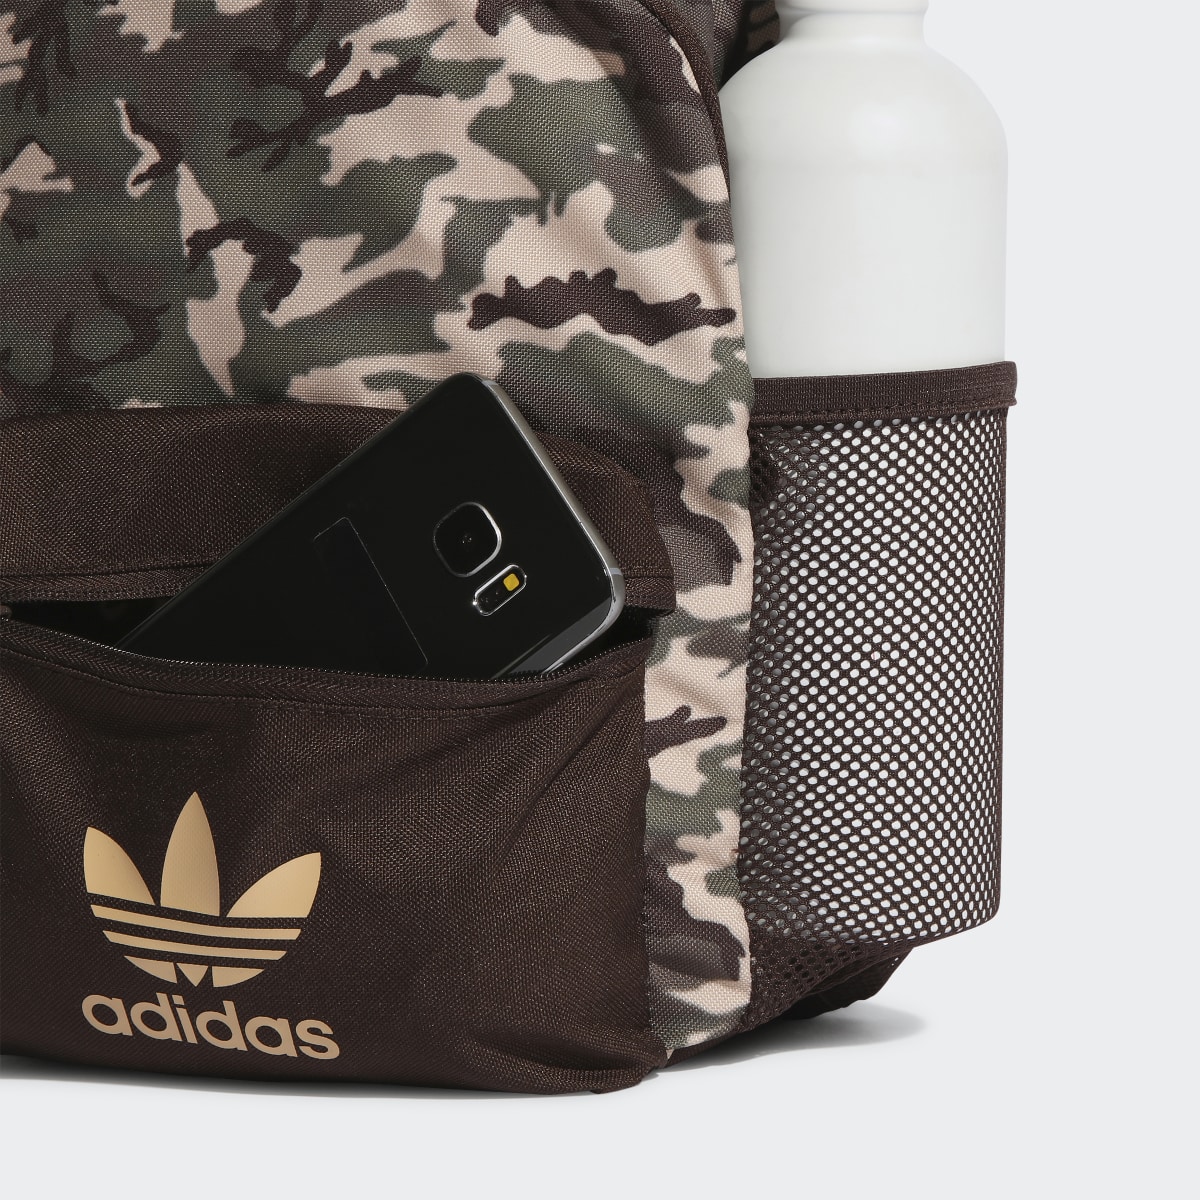 Adidas Camo Backpack. 6